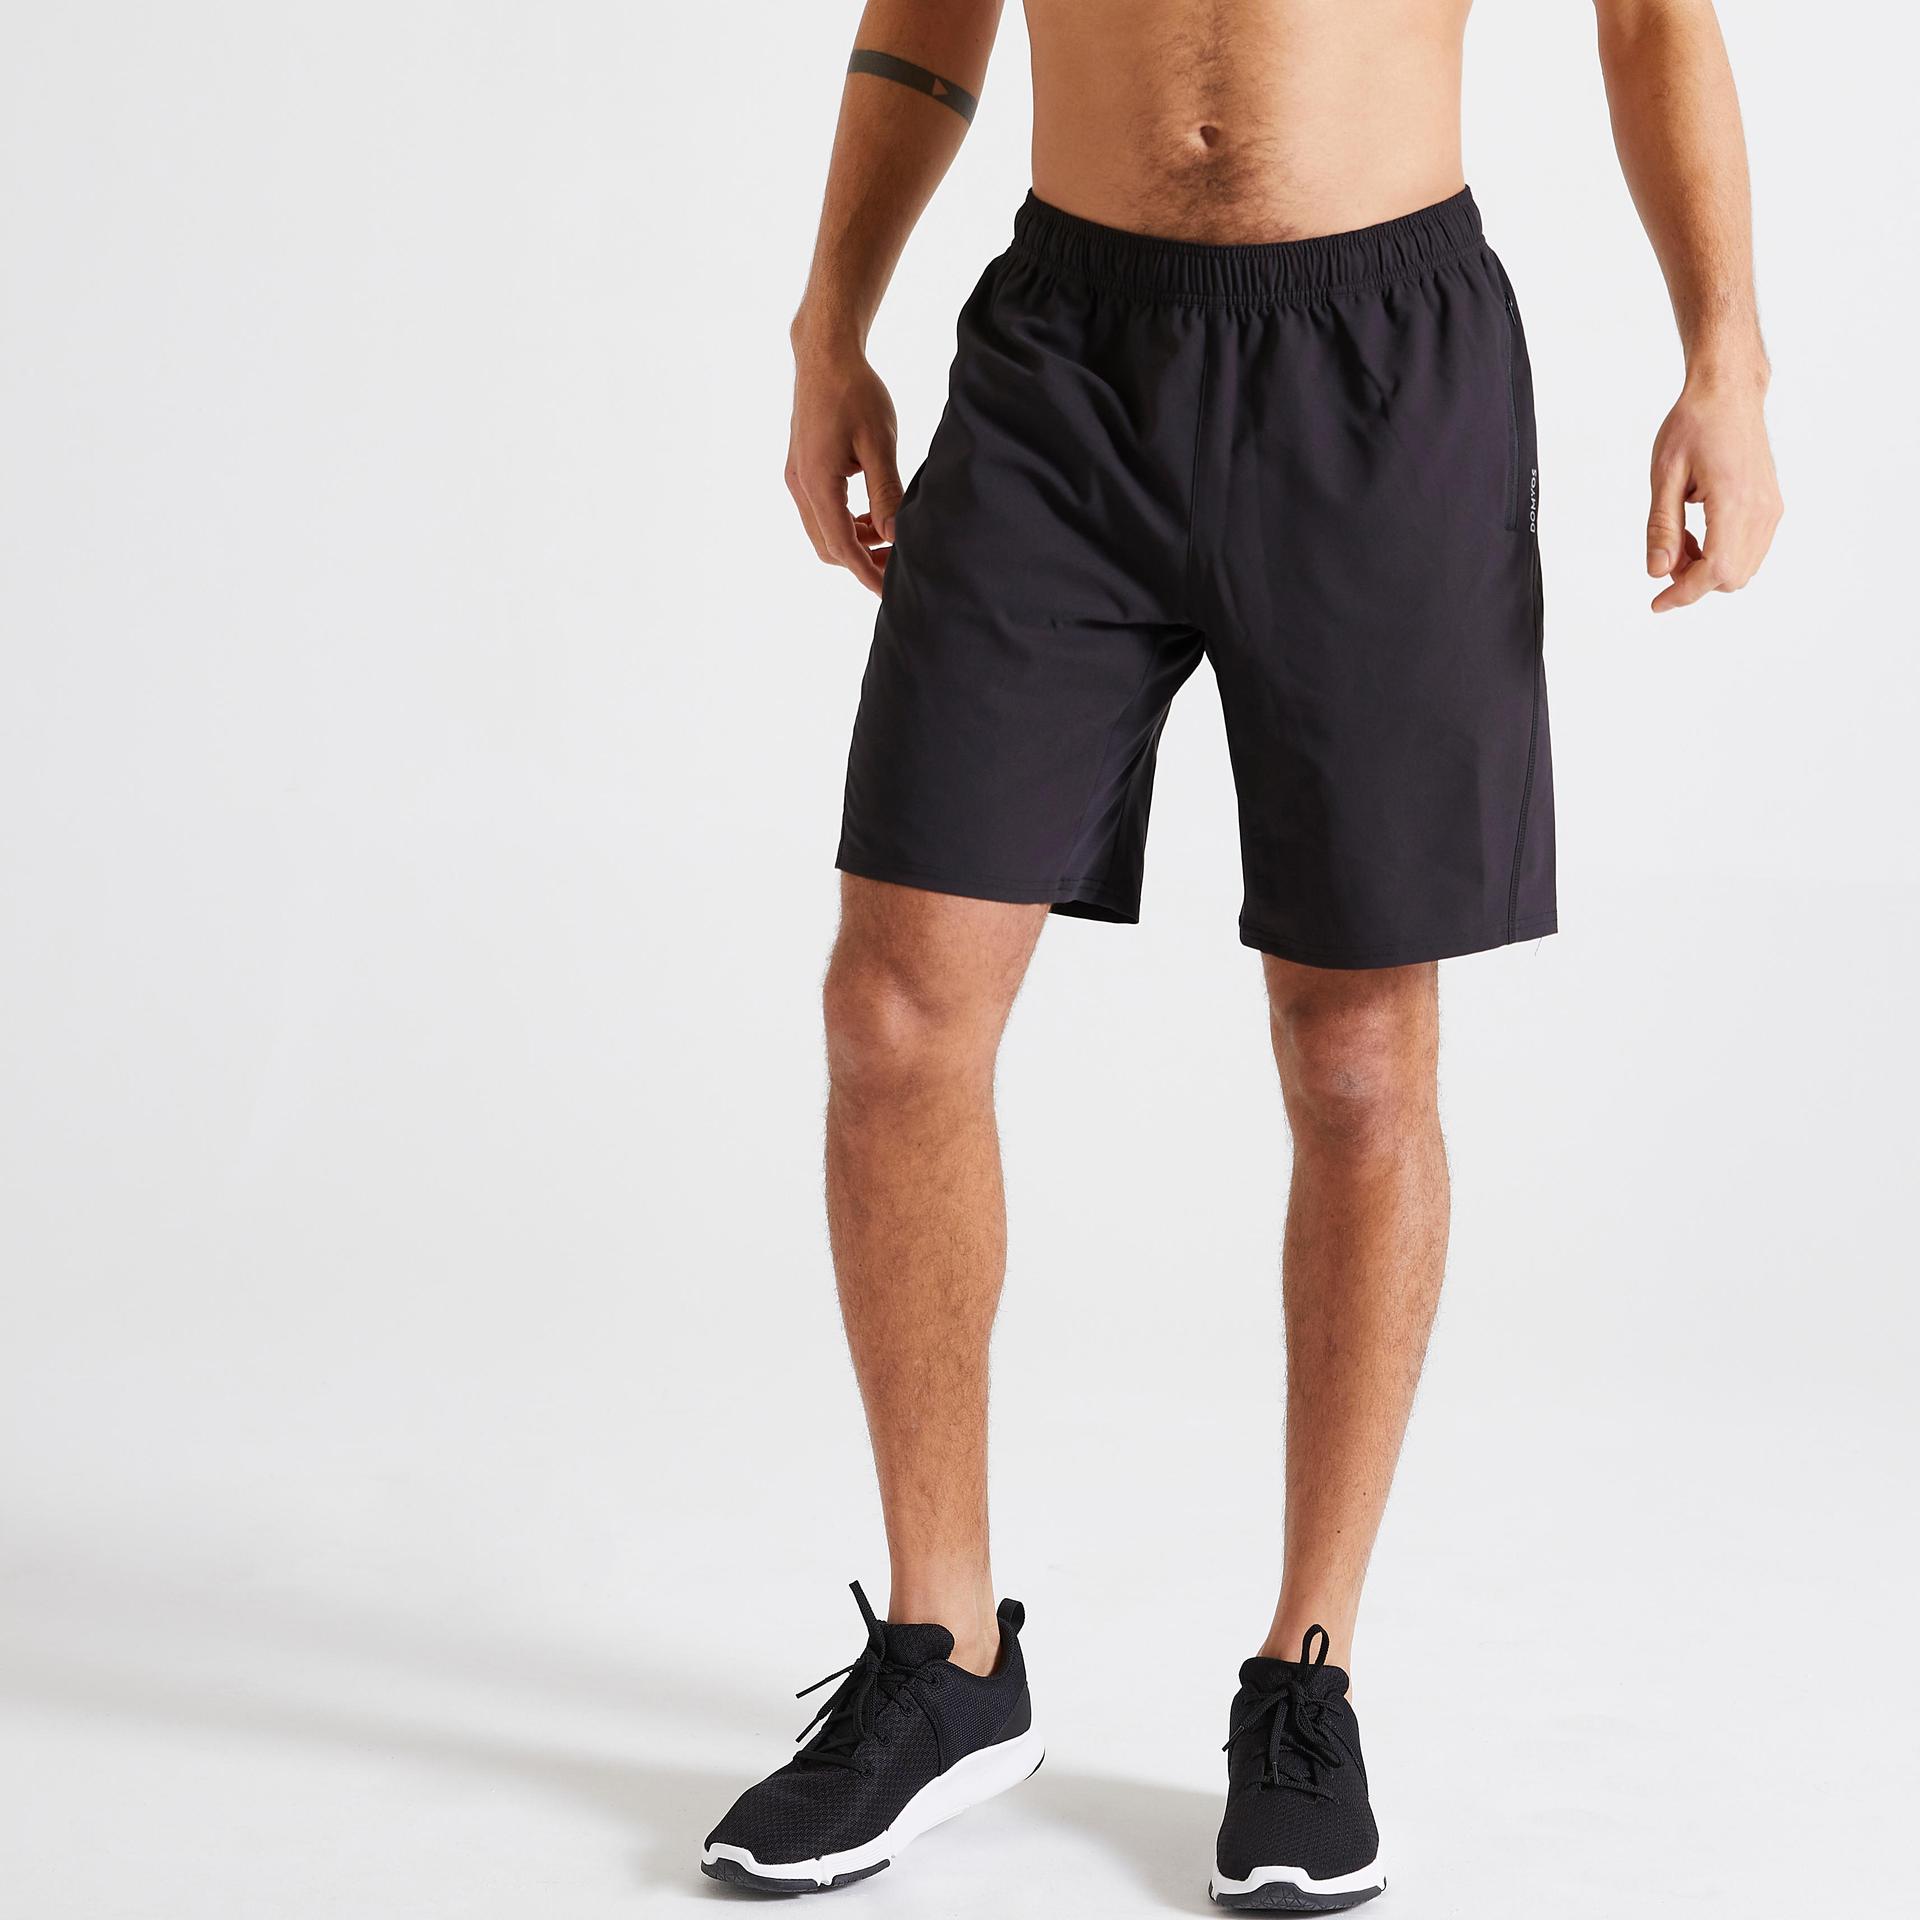 men gym shorts polyester with zip pockets fst 120 black